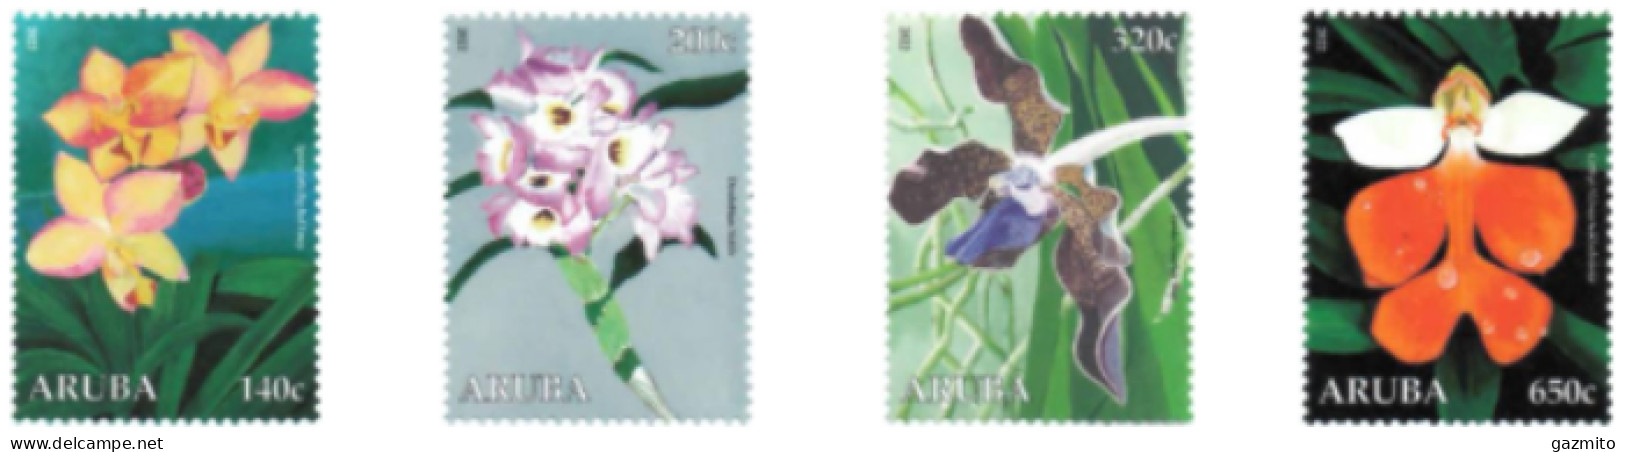 Aruba 2022, Orchids, 4val - Curazao, Antillas Holandesas, Aruba